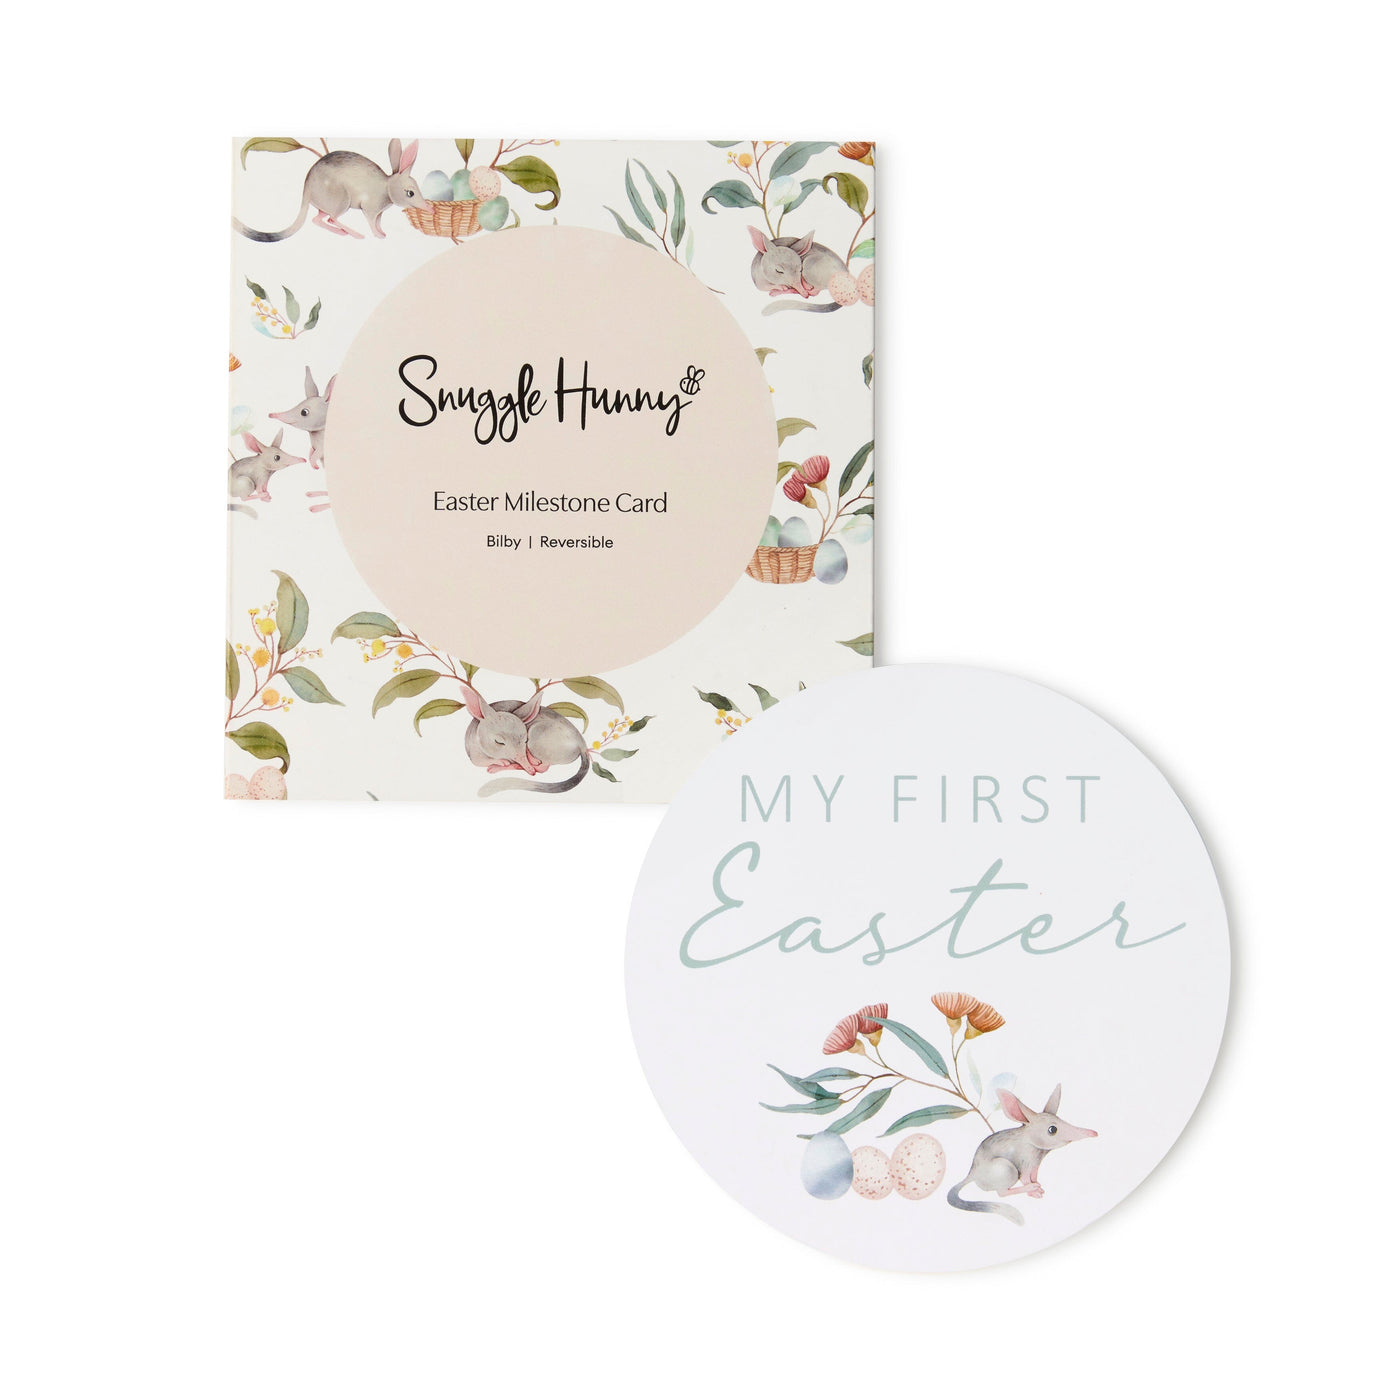 Snuggle Hunny Reversible Single Milestone Cards - Easter Bilby Milestones Snuggle Hunny 